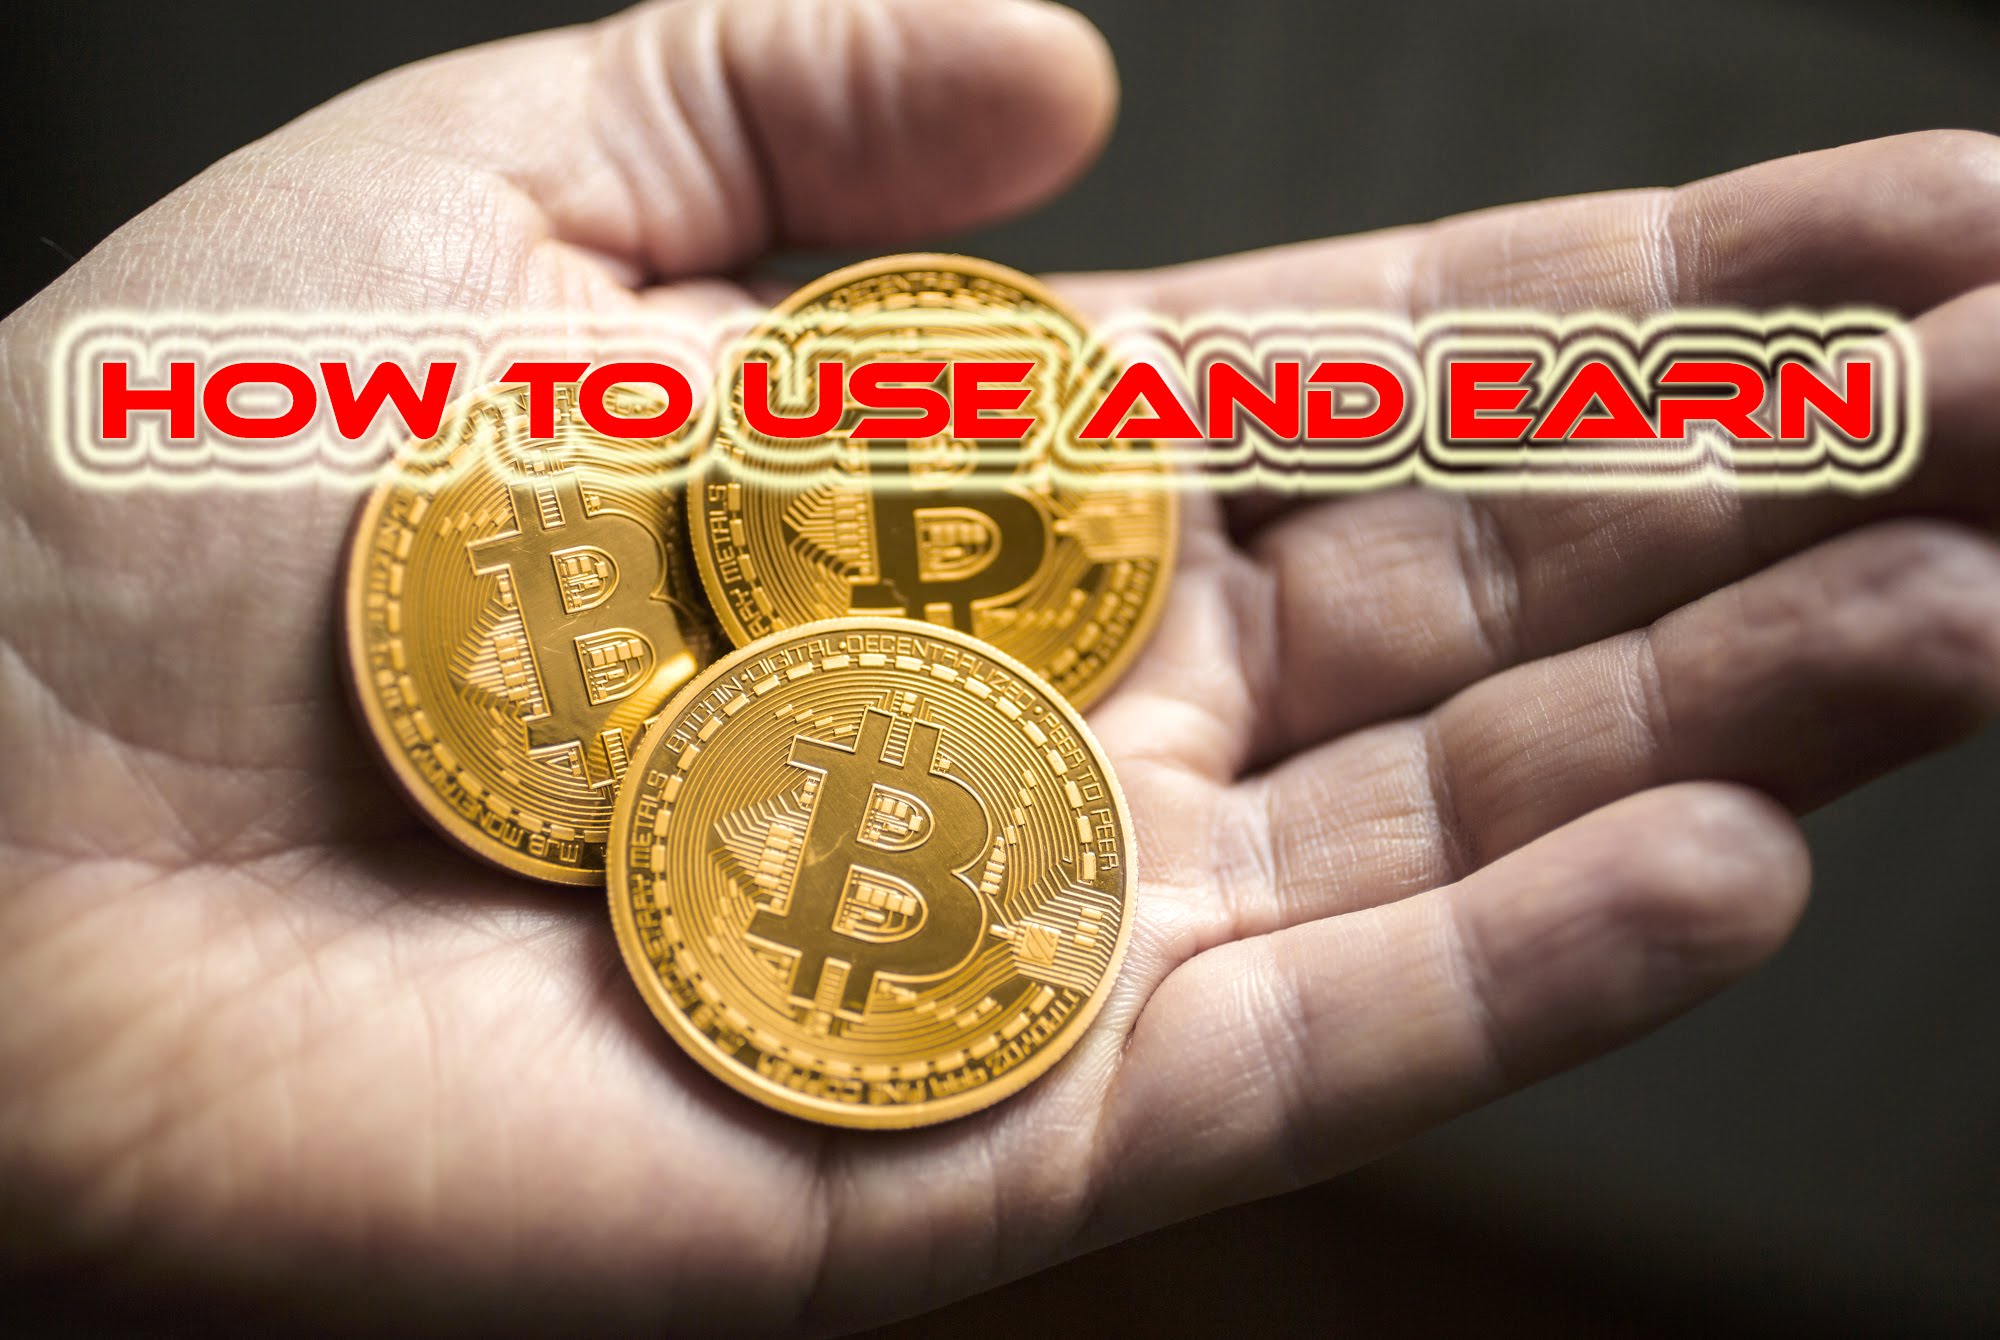 where can i use bitcoins